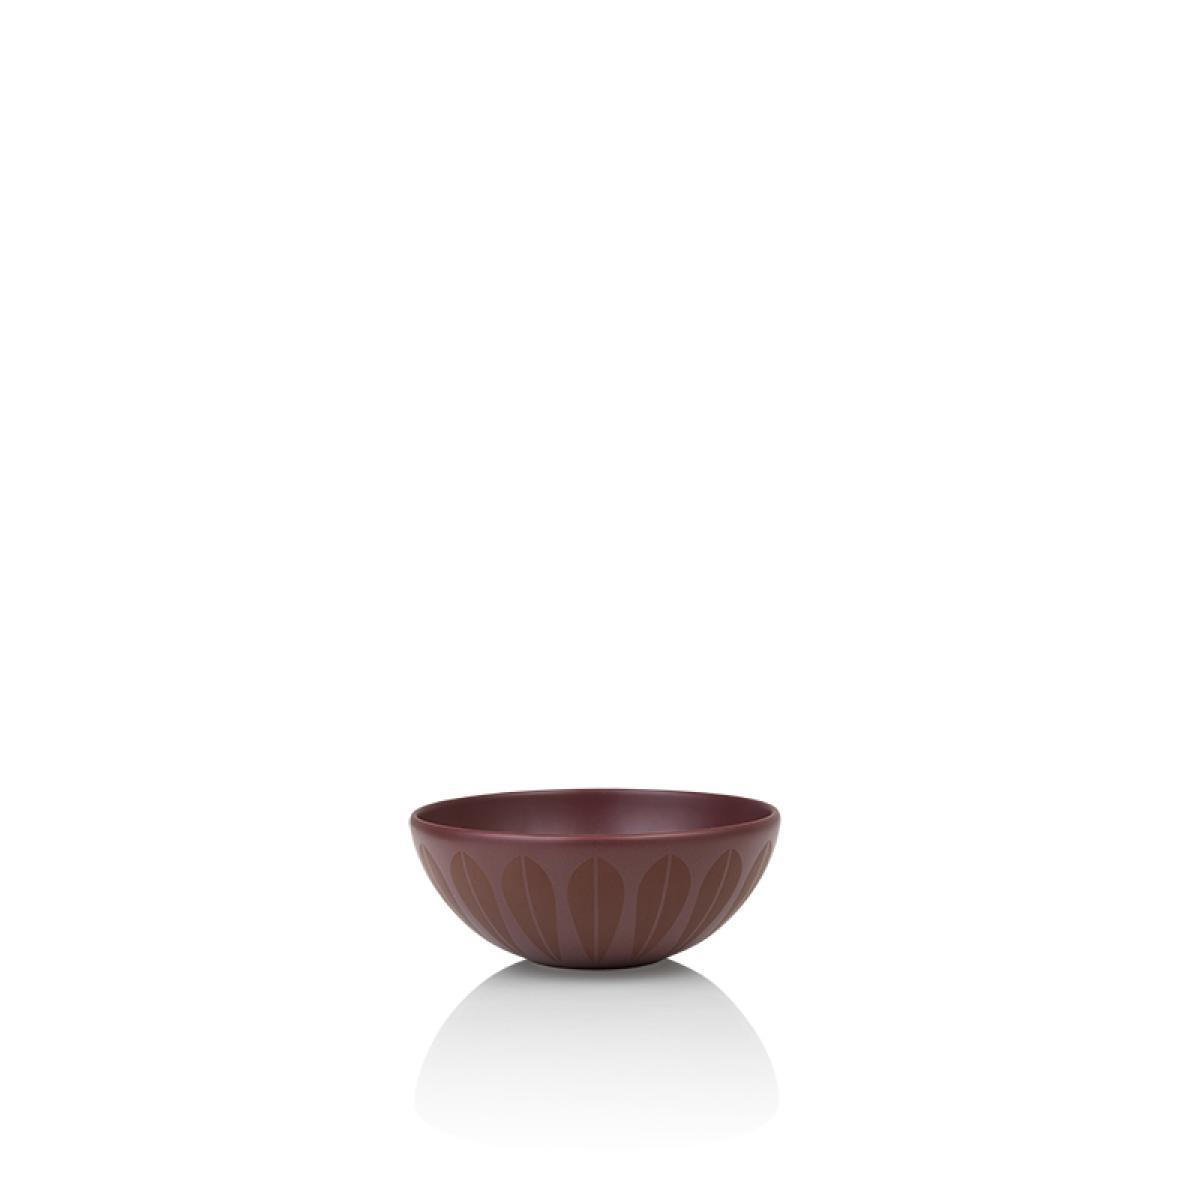 Lucie Kaas Arne Clausen Bowl scuro rosso, 12 cm